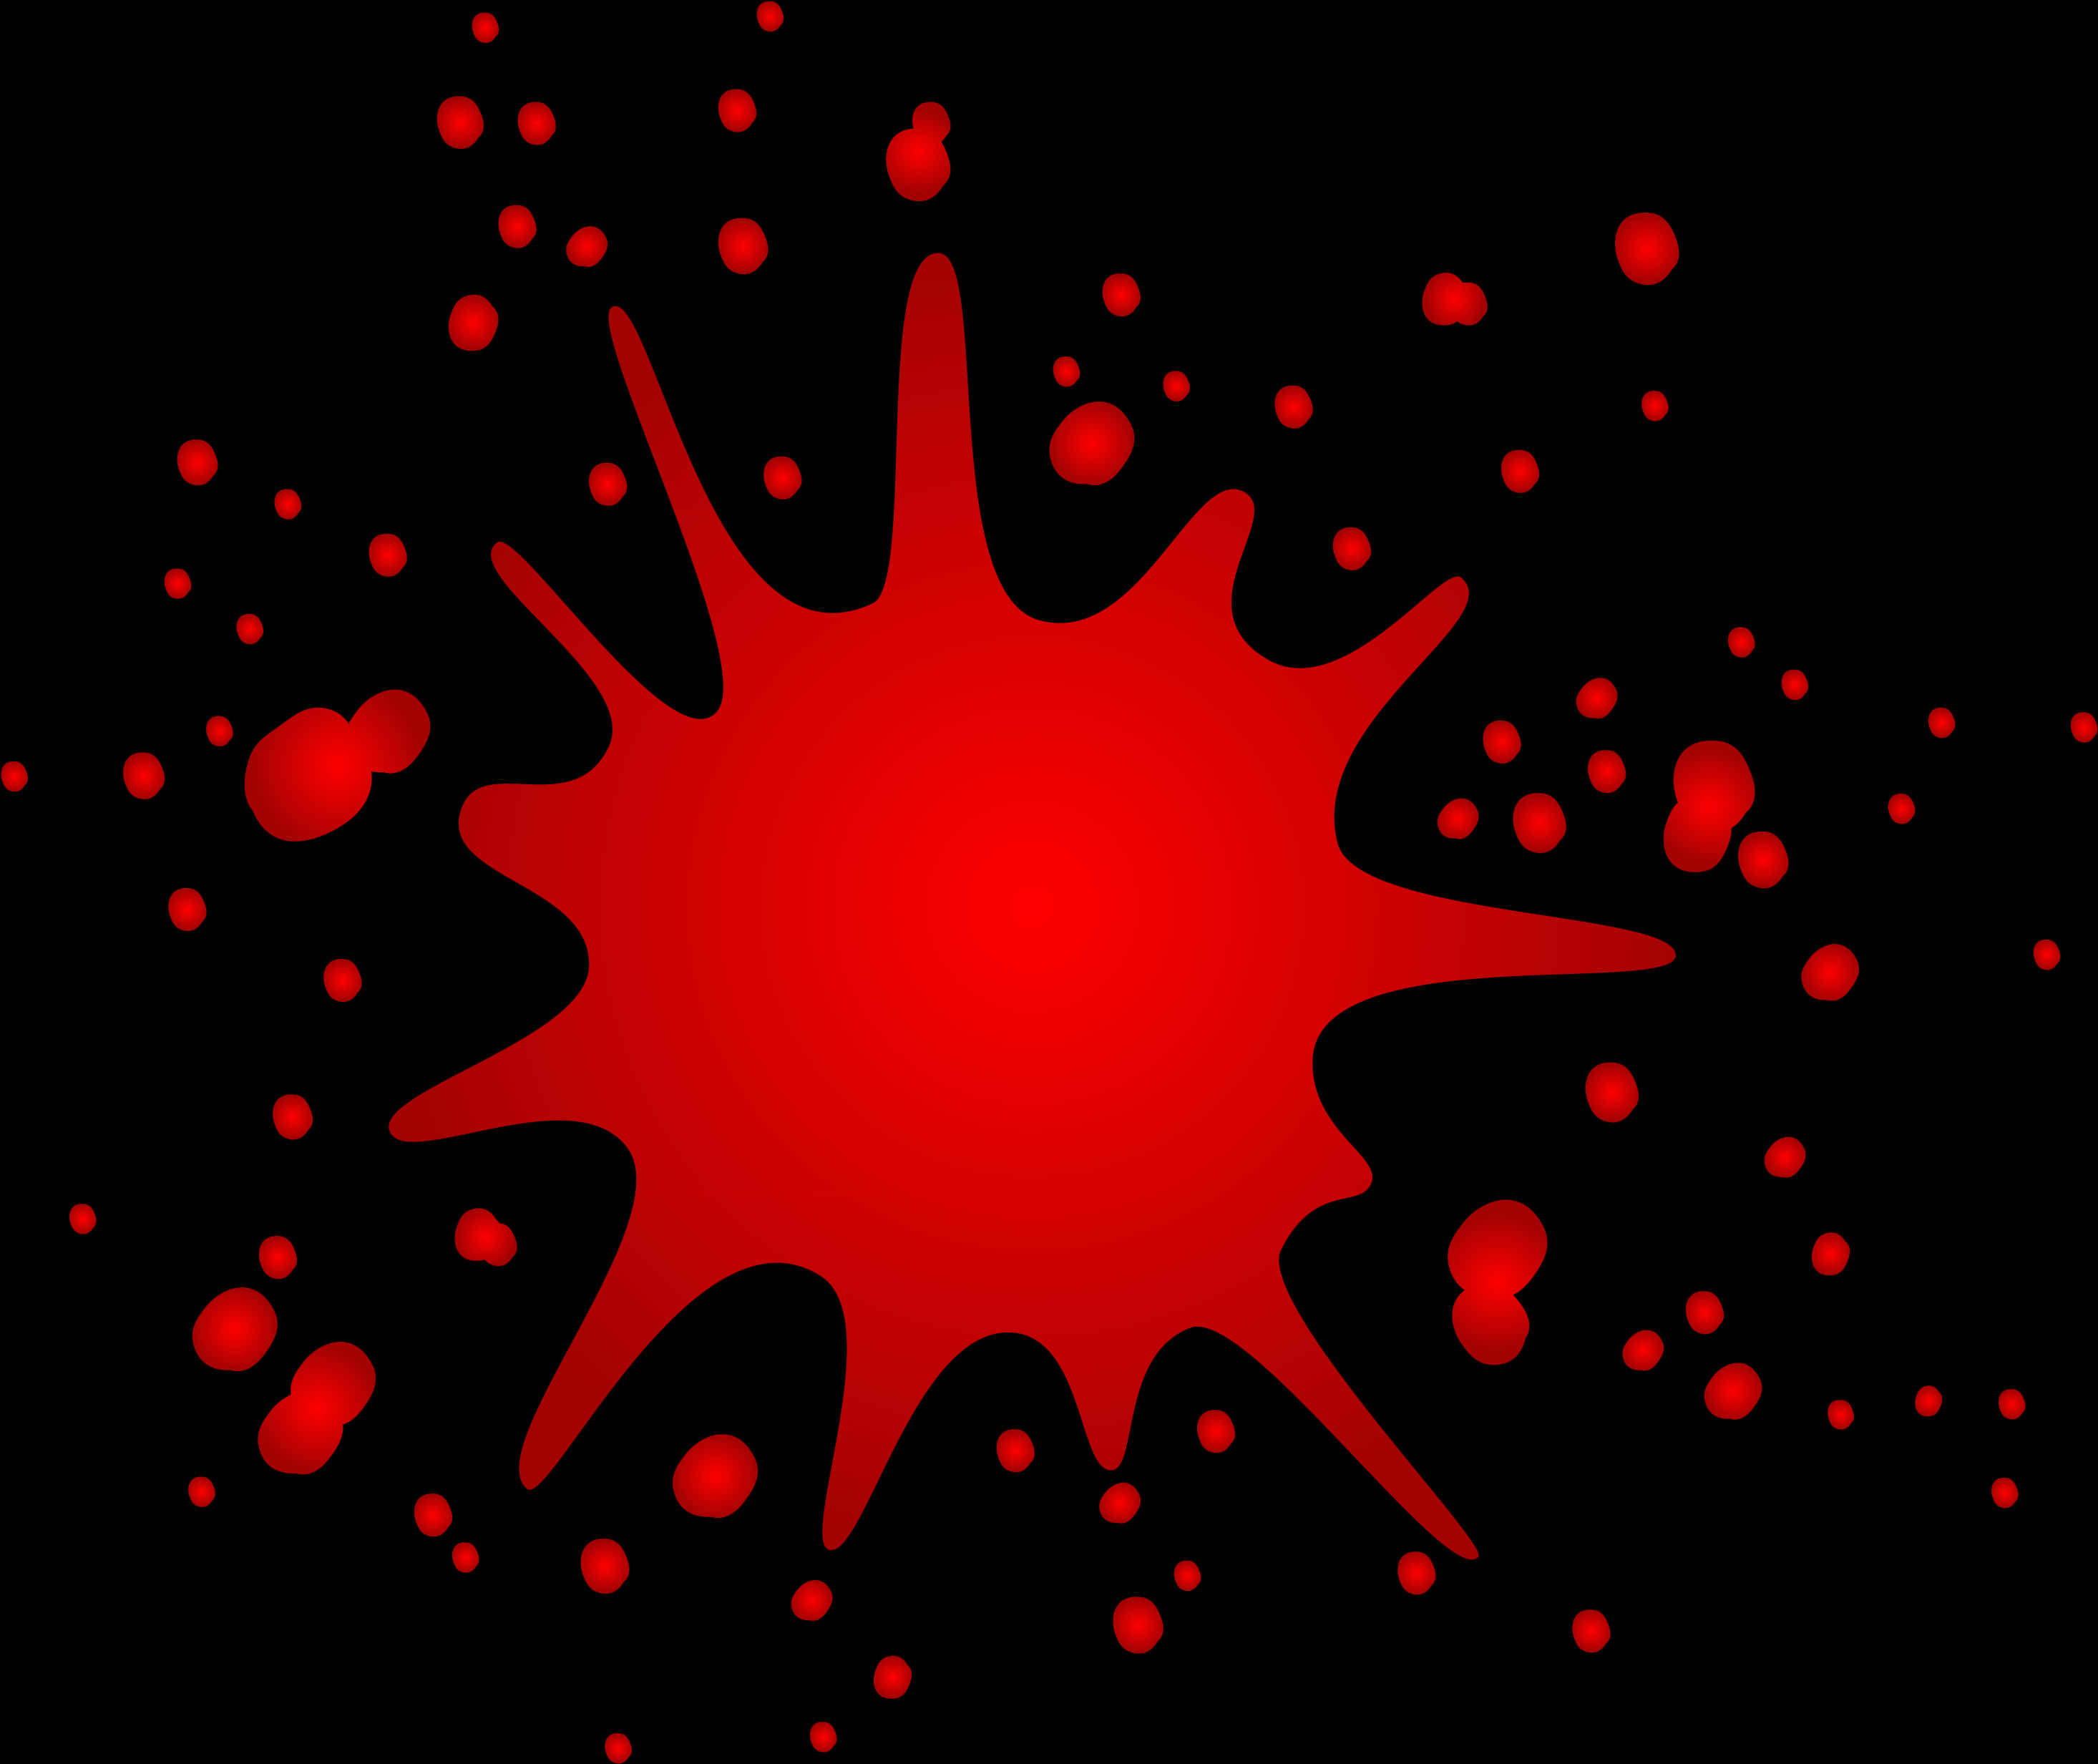 Red Blood Splatter Graphic